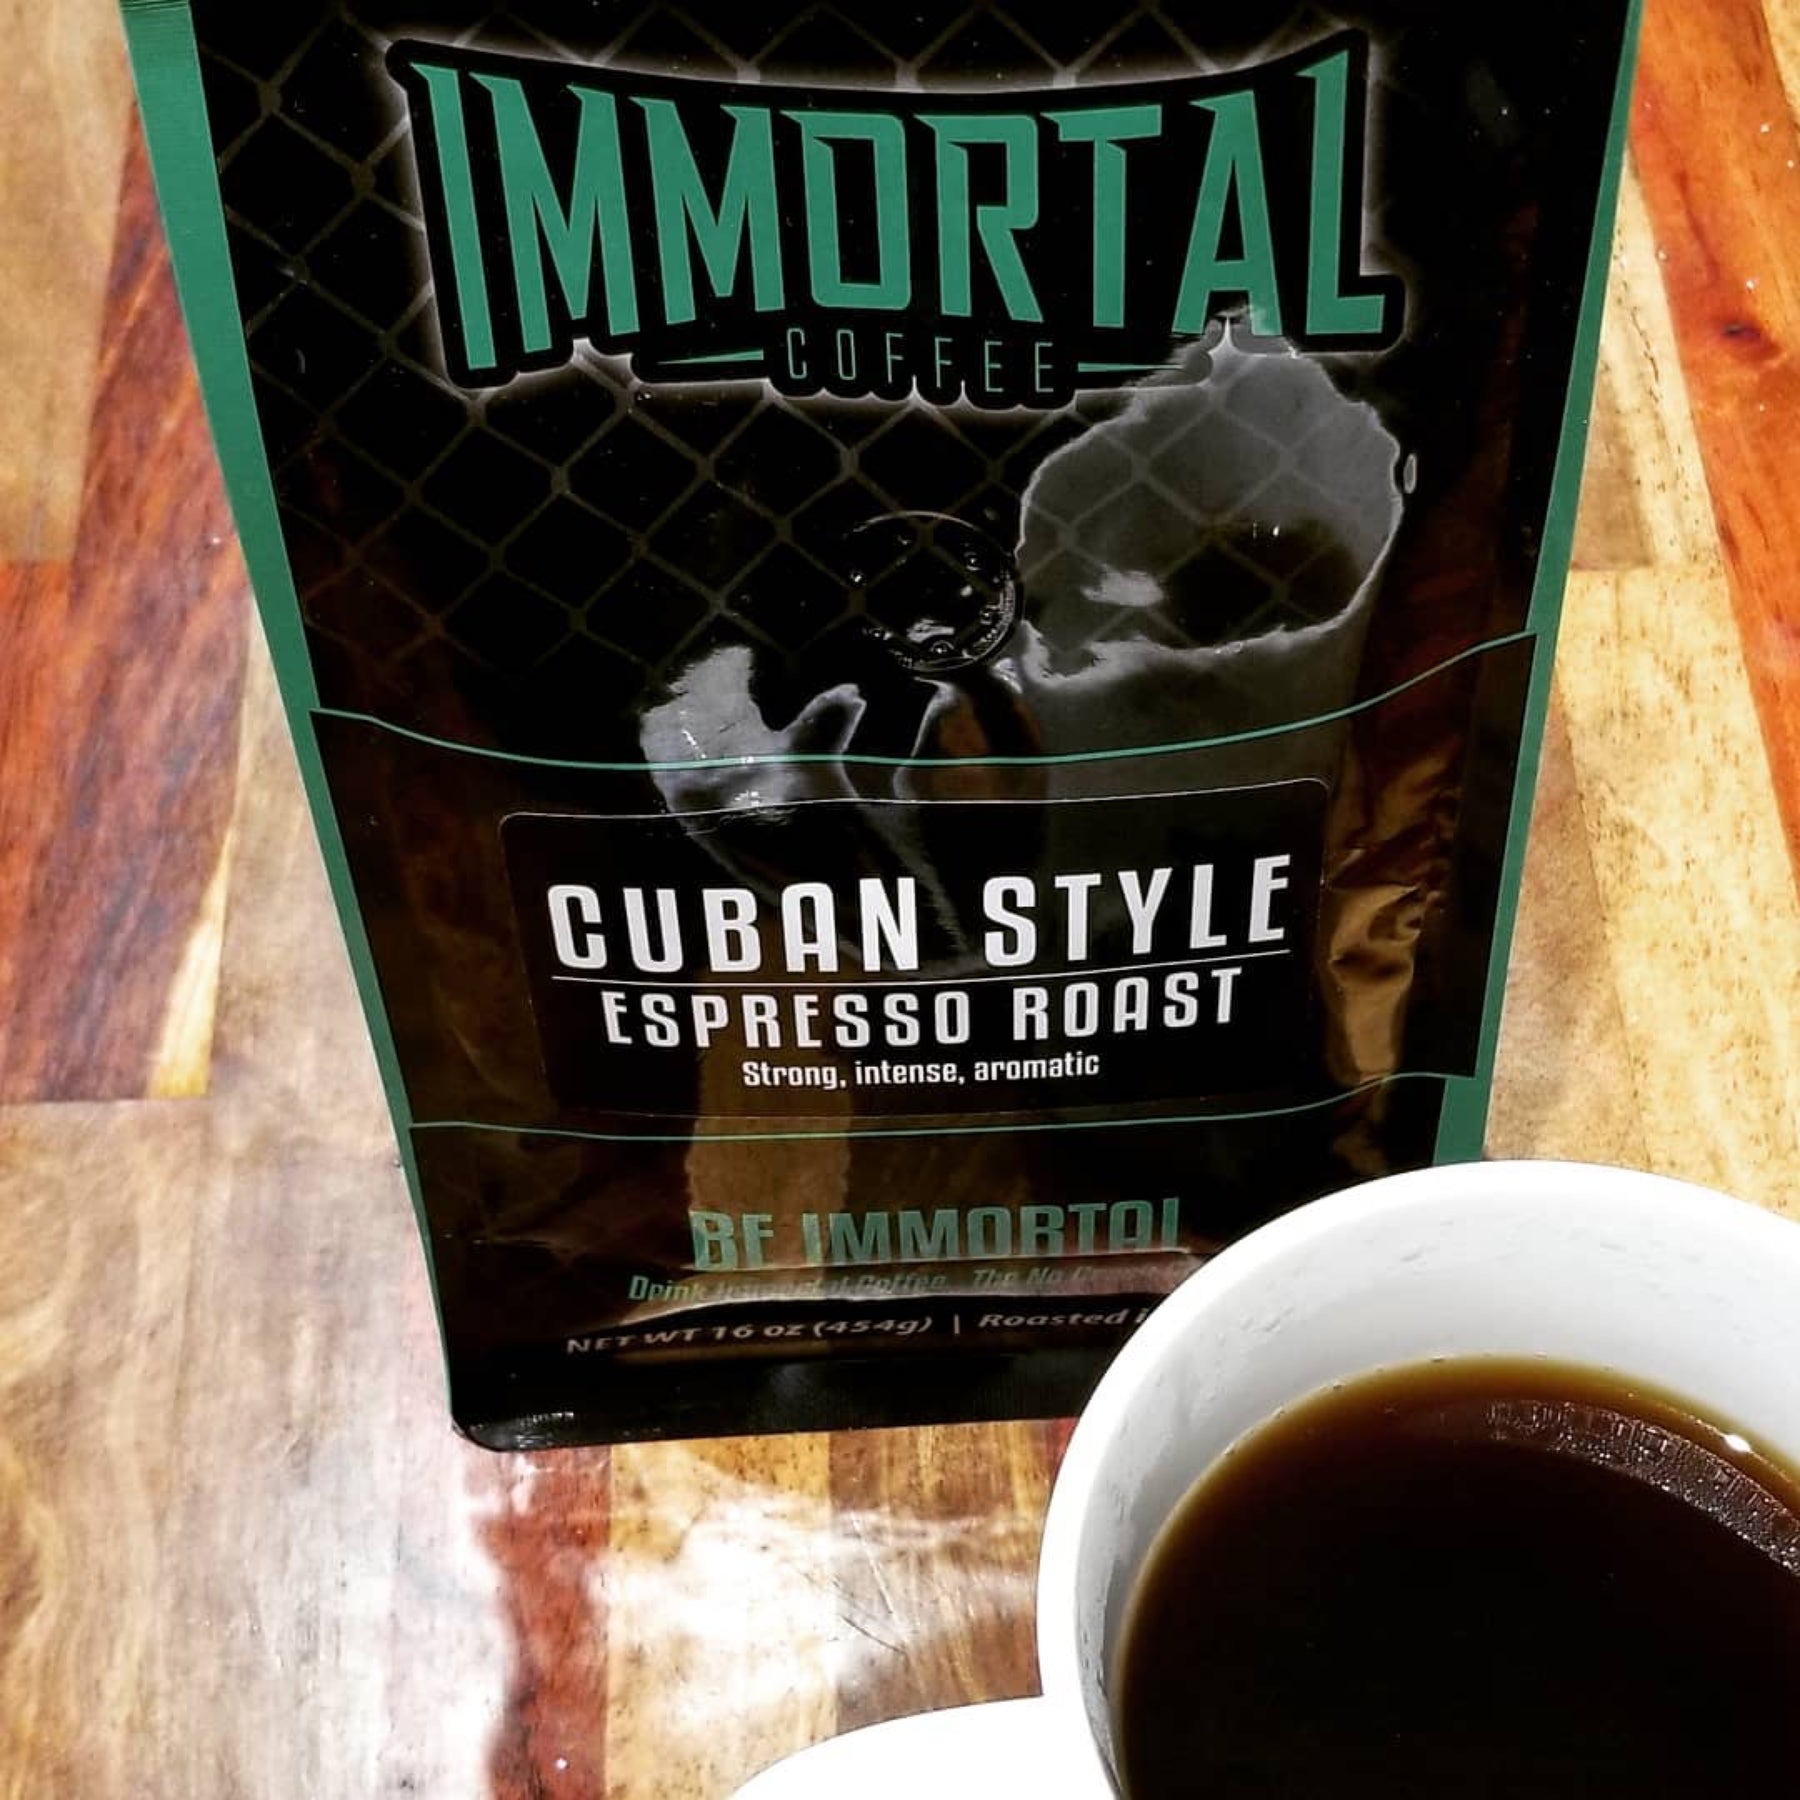 The Immortal Coffee